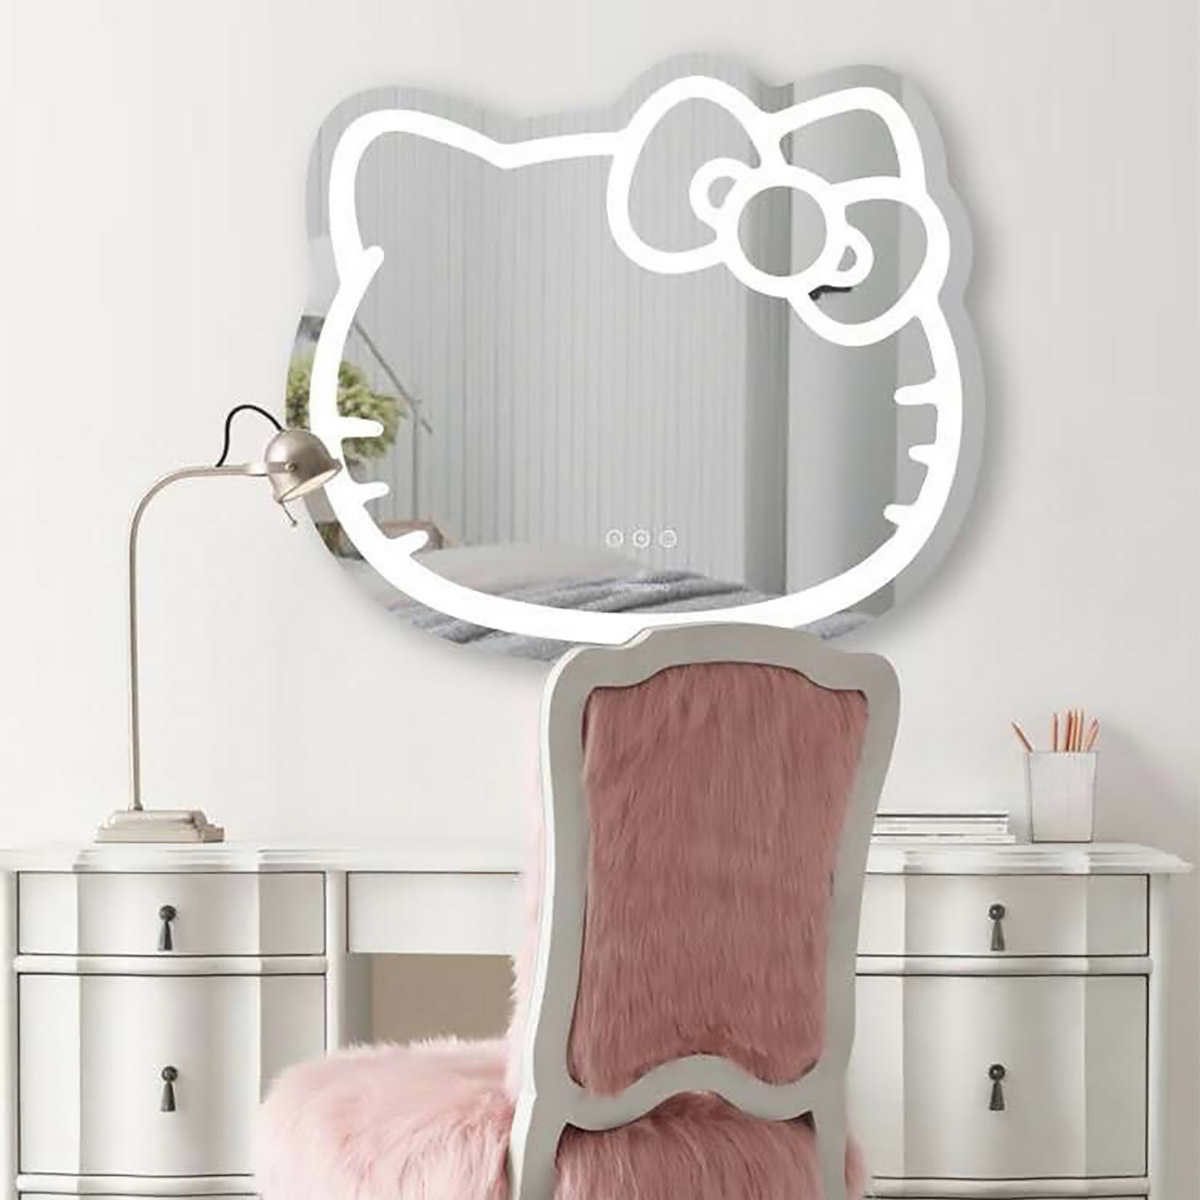 Hello Kitty Office Chair Hello Kitty Room Decoration